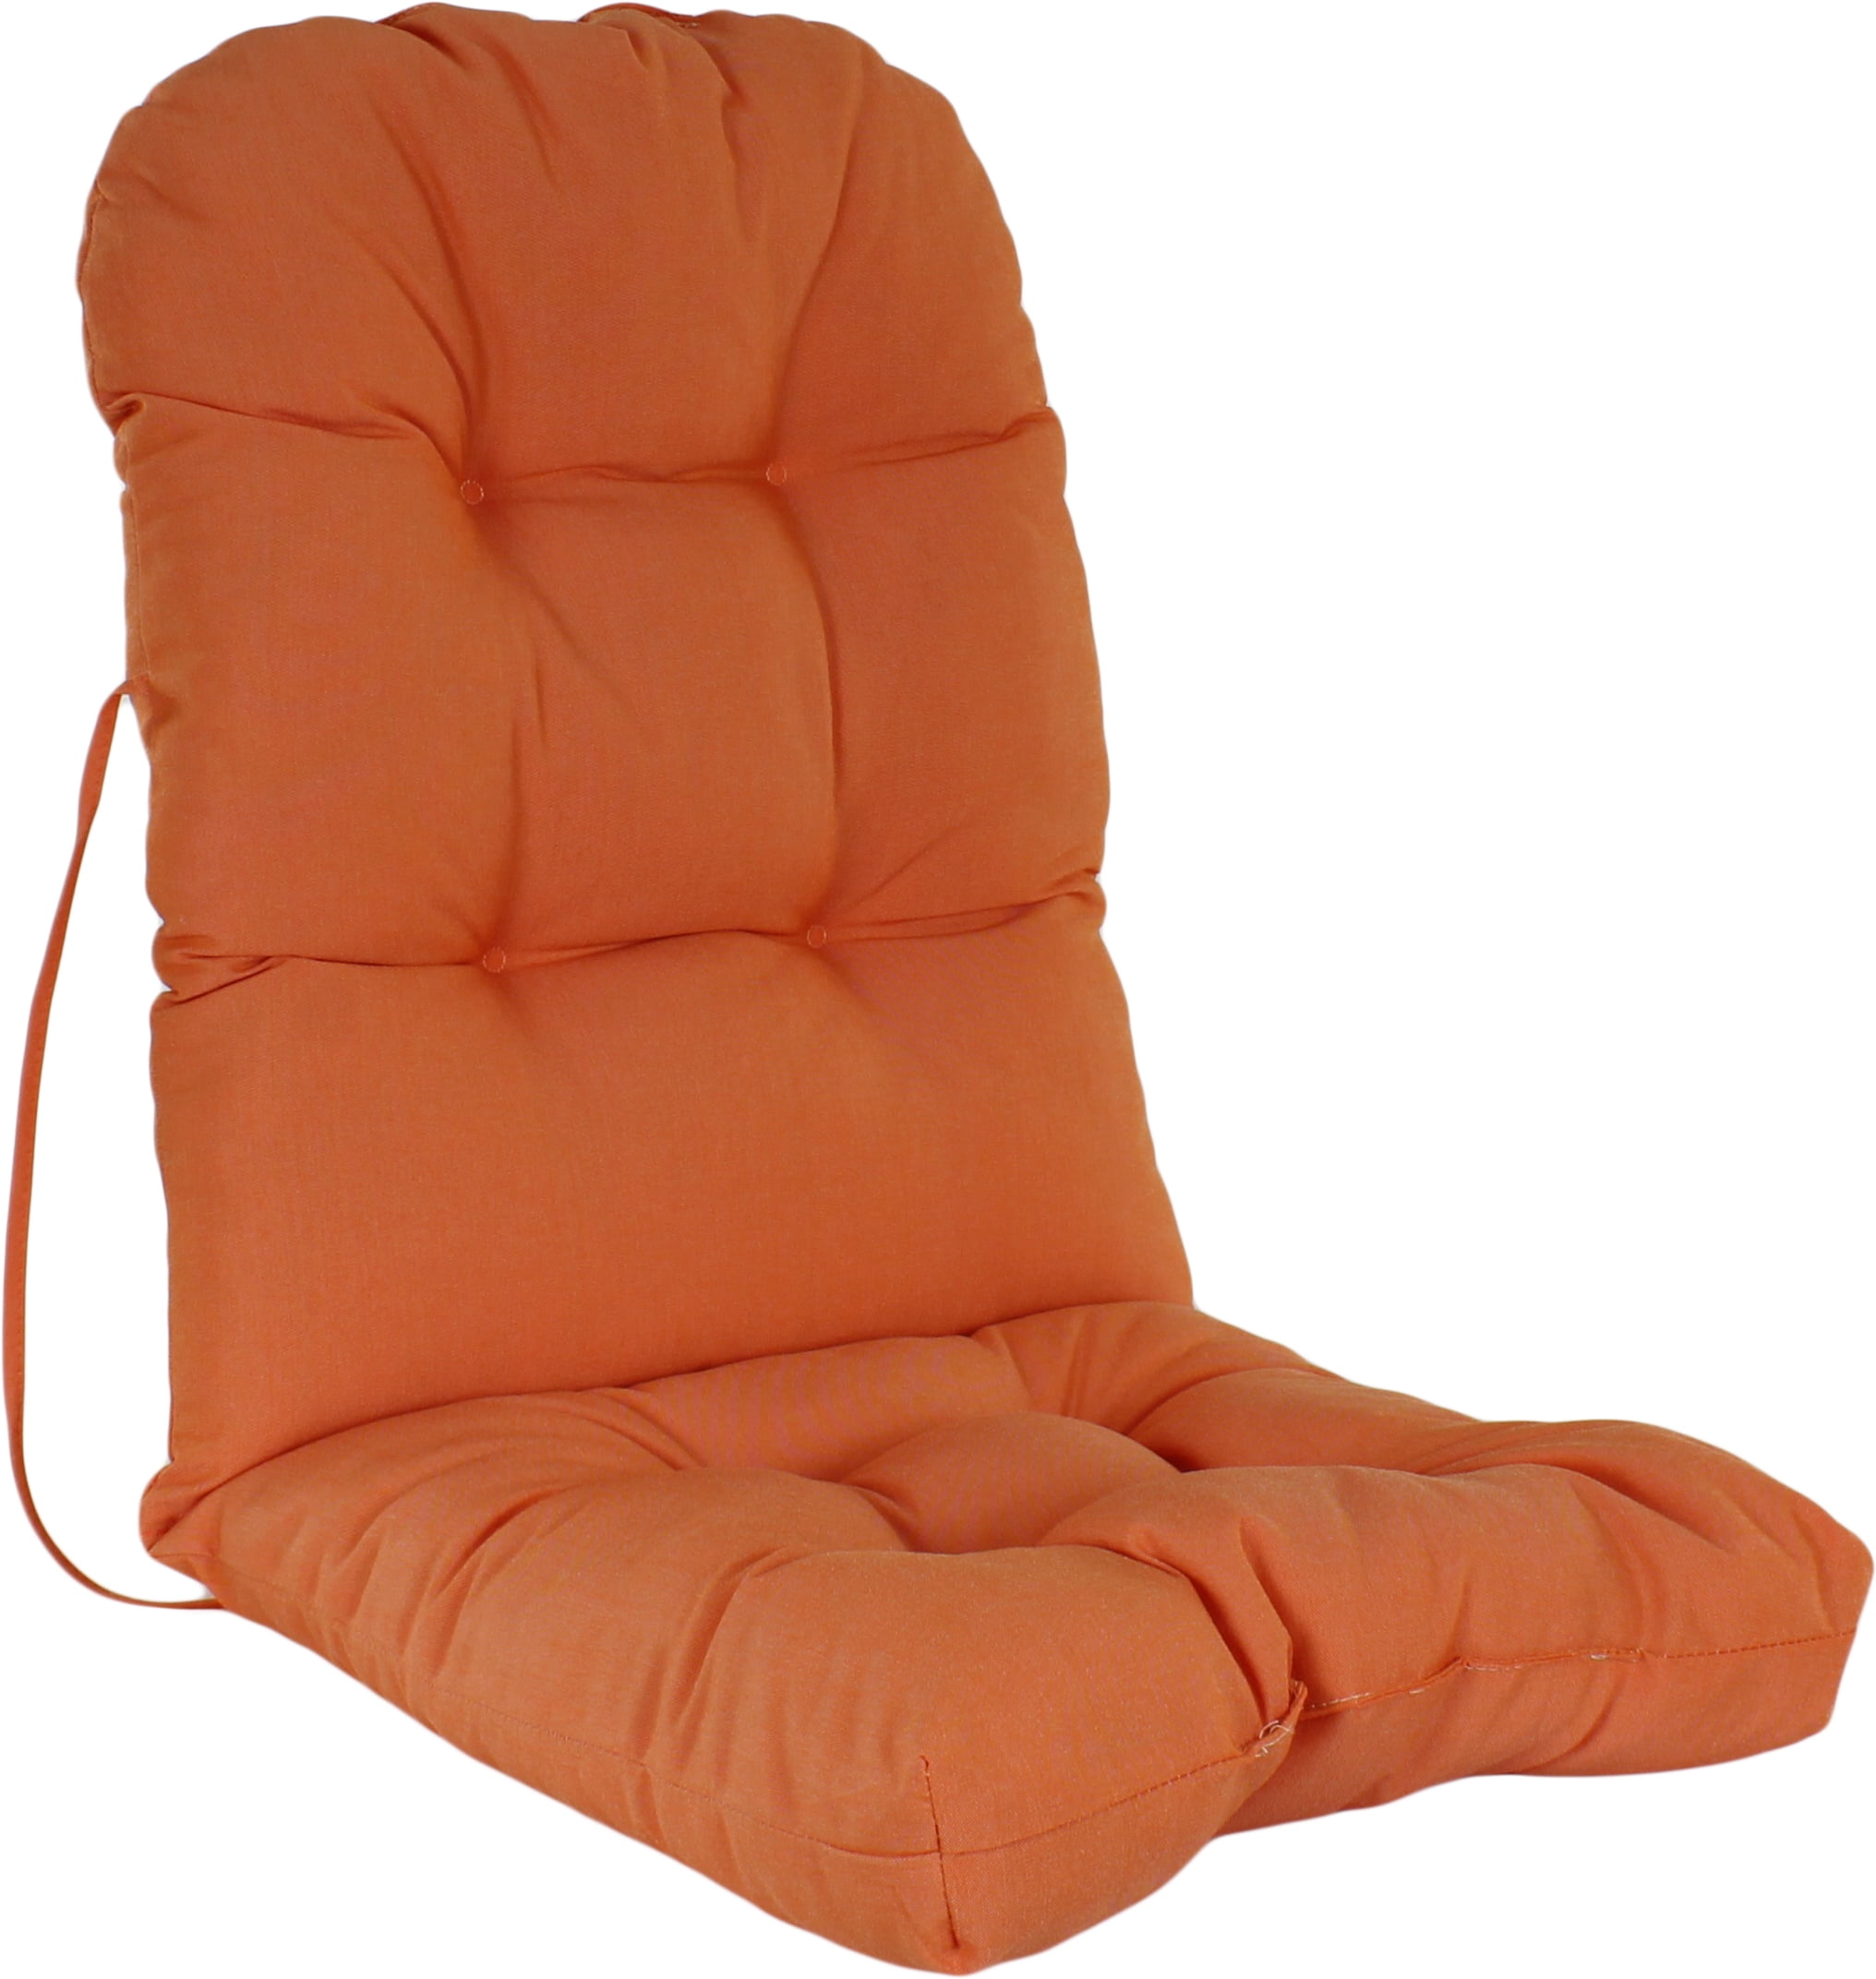 Tuscan Orange Canvas Indoor / Outdoor Adirondack Cushion Patio Chair